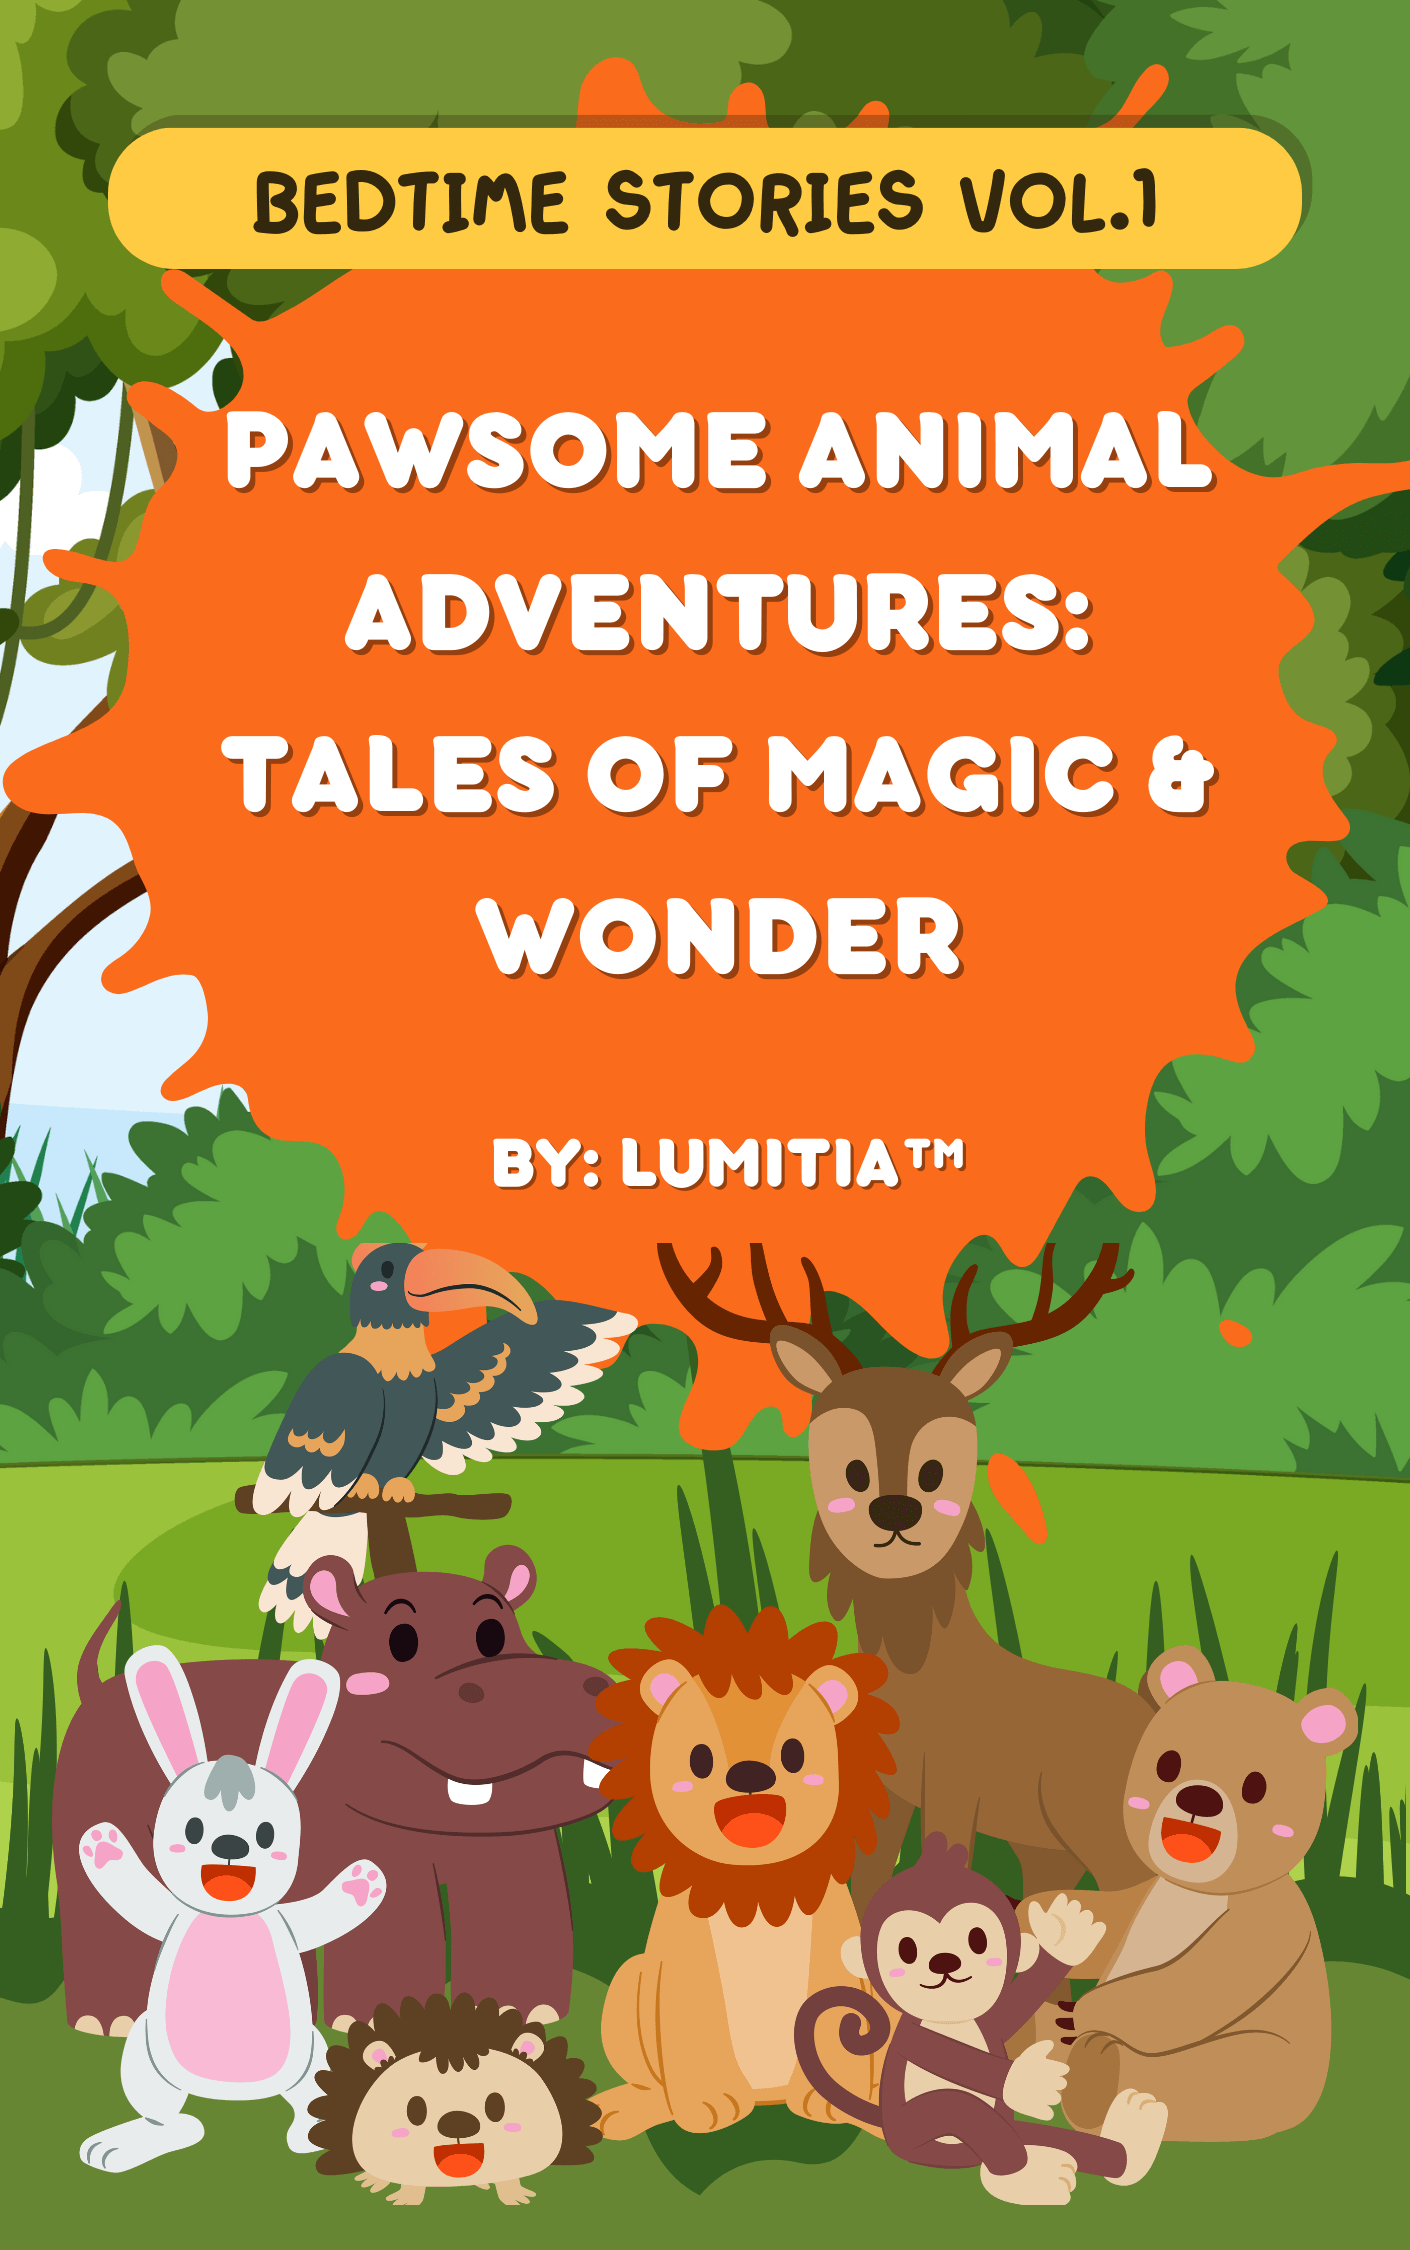 Lumitia_Pawsome_Animal_Adventures_Storybook